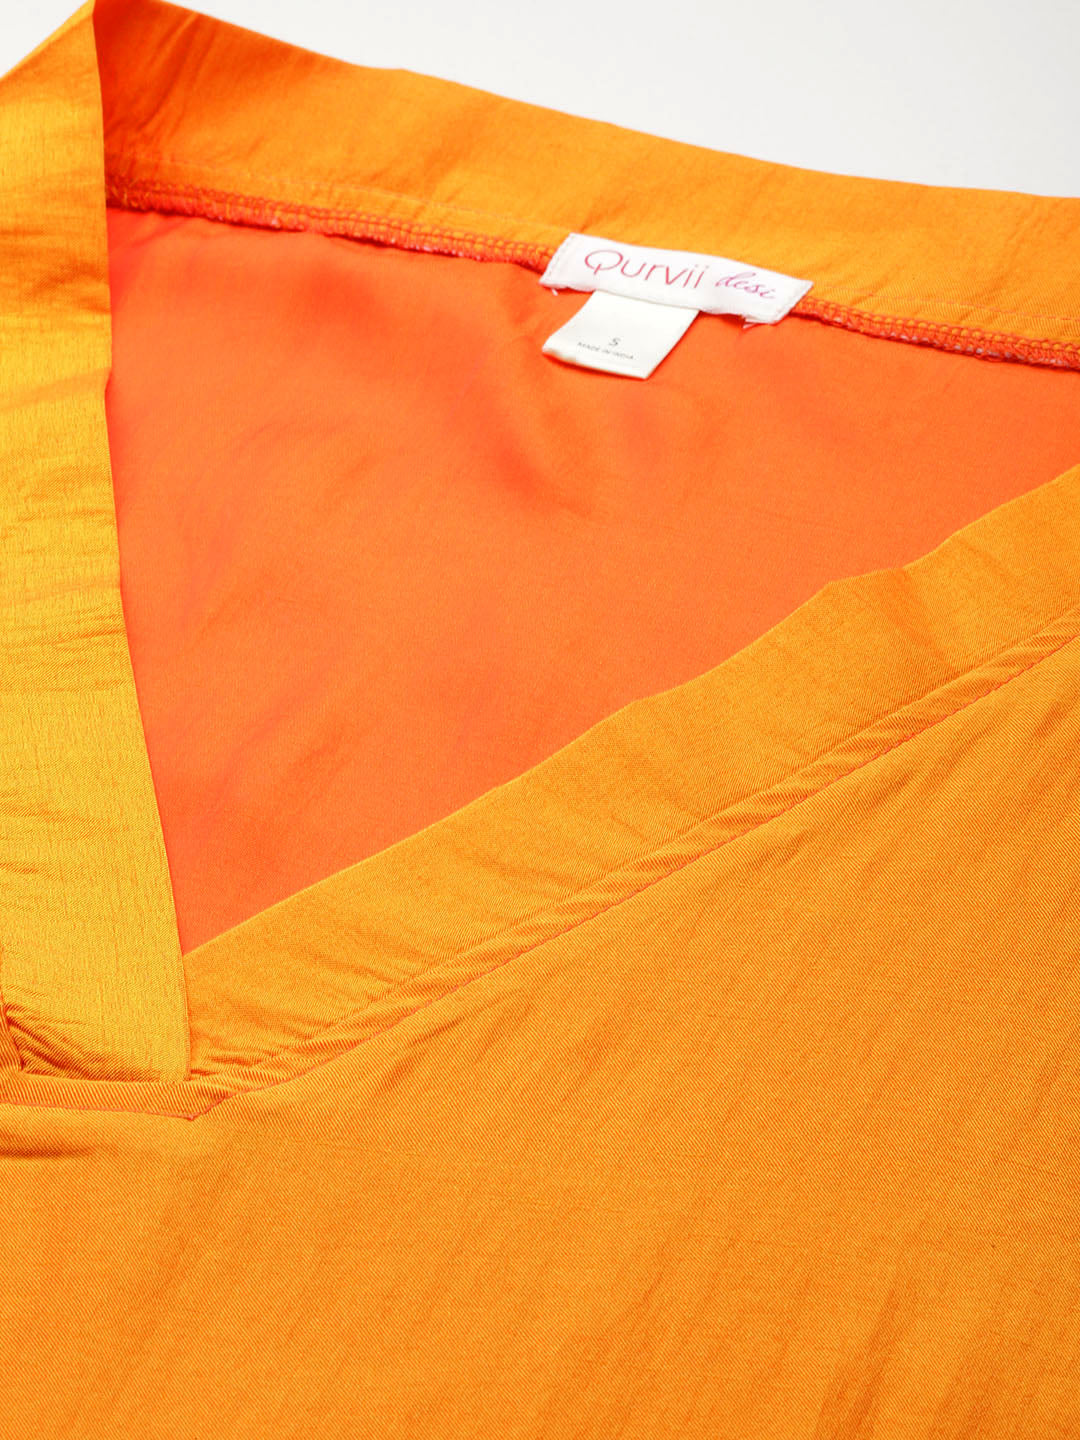 Saffron & Orange silk Kimono oversize dress